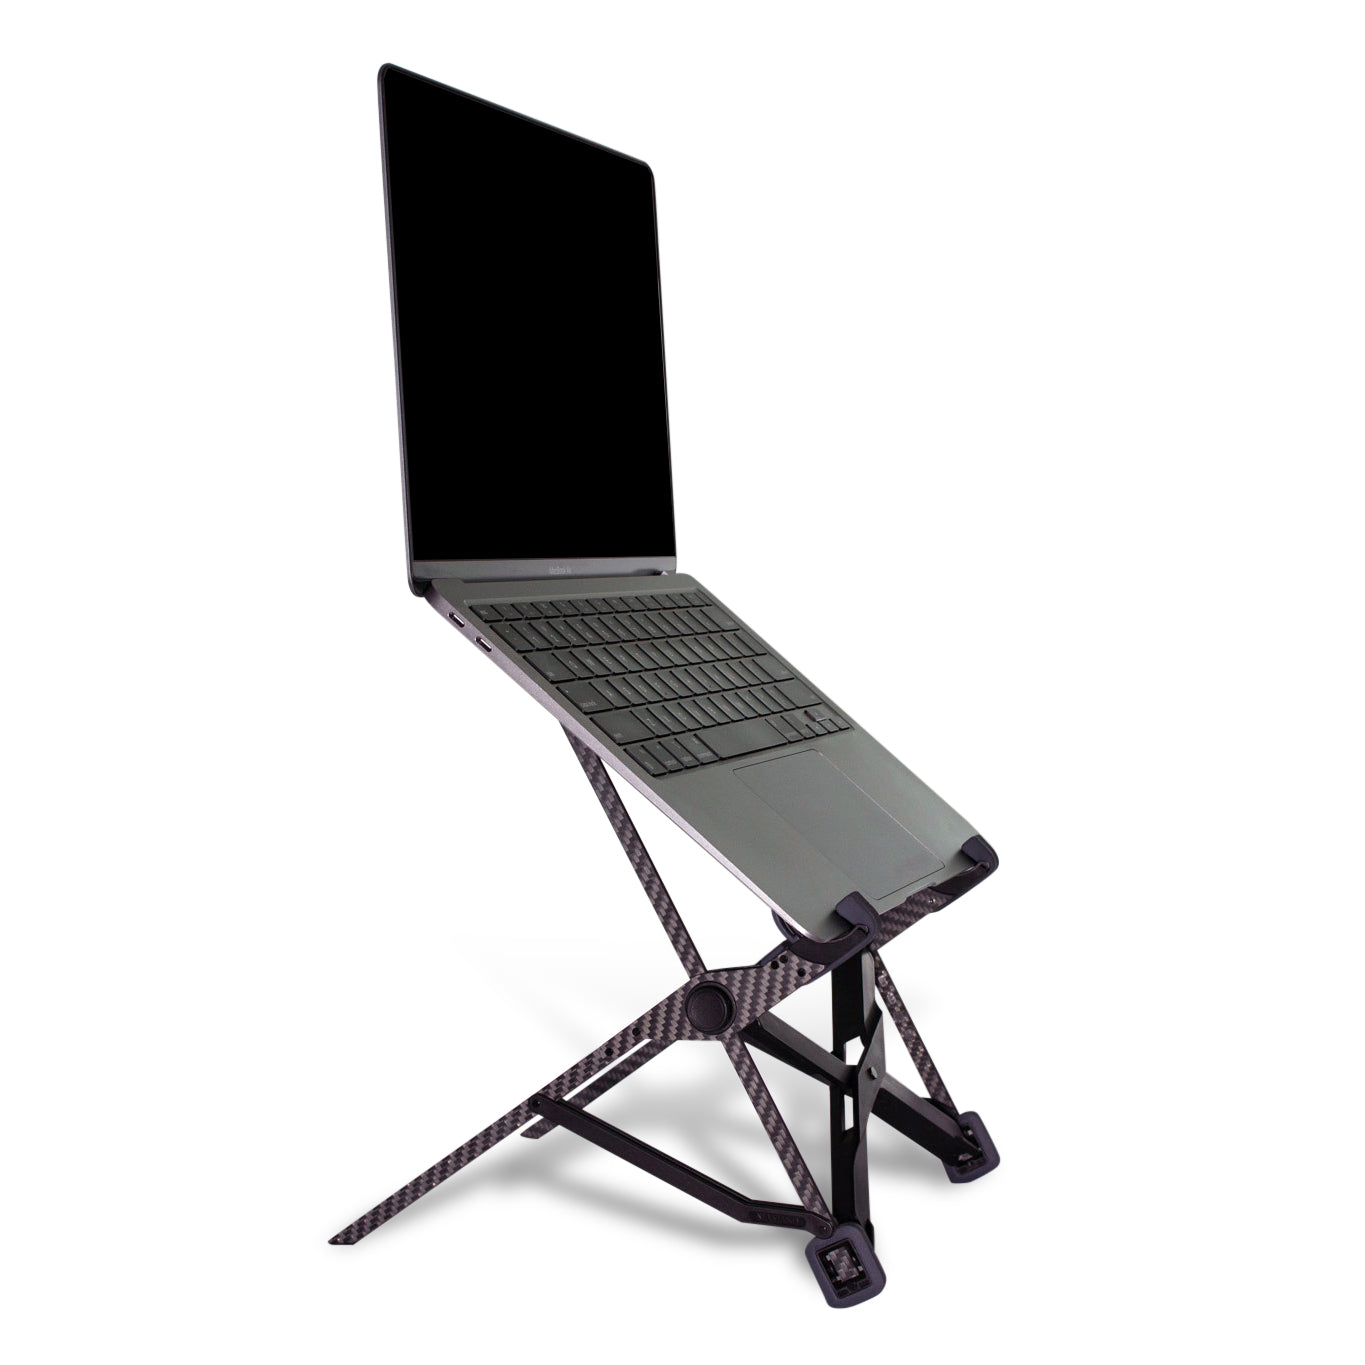 Nexstand K1 Carbon Fiber Laptop Stand